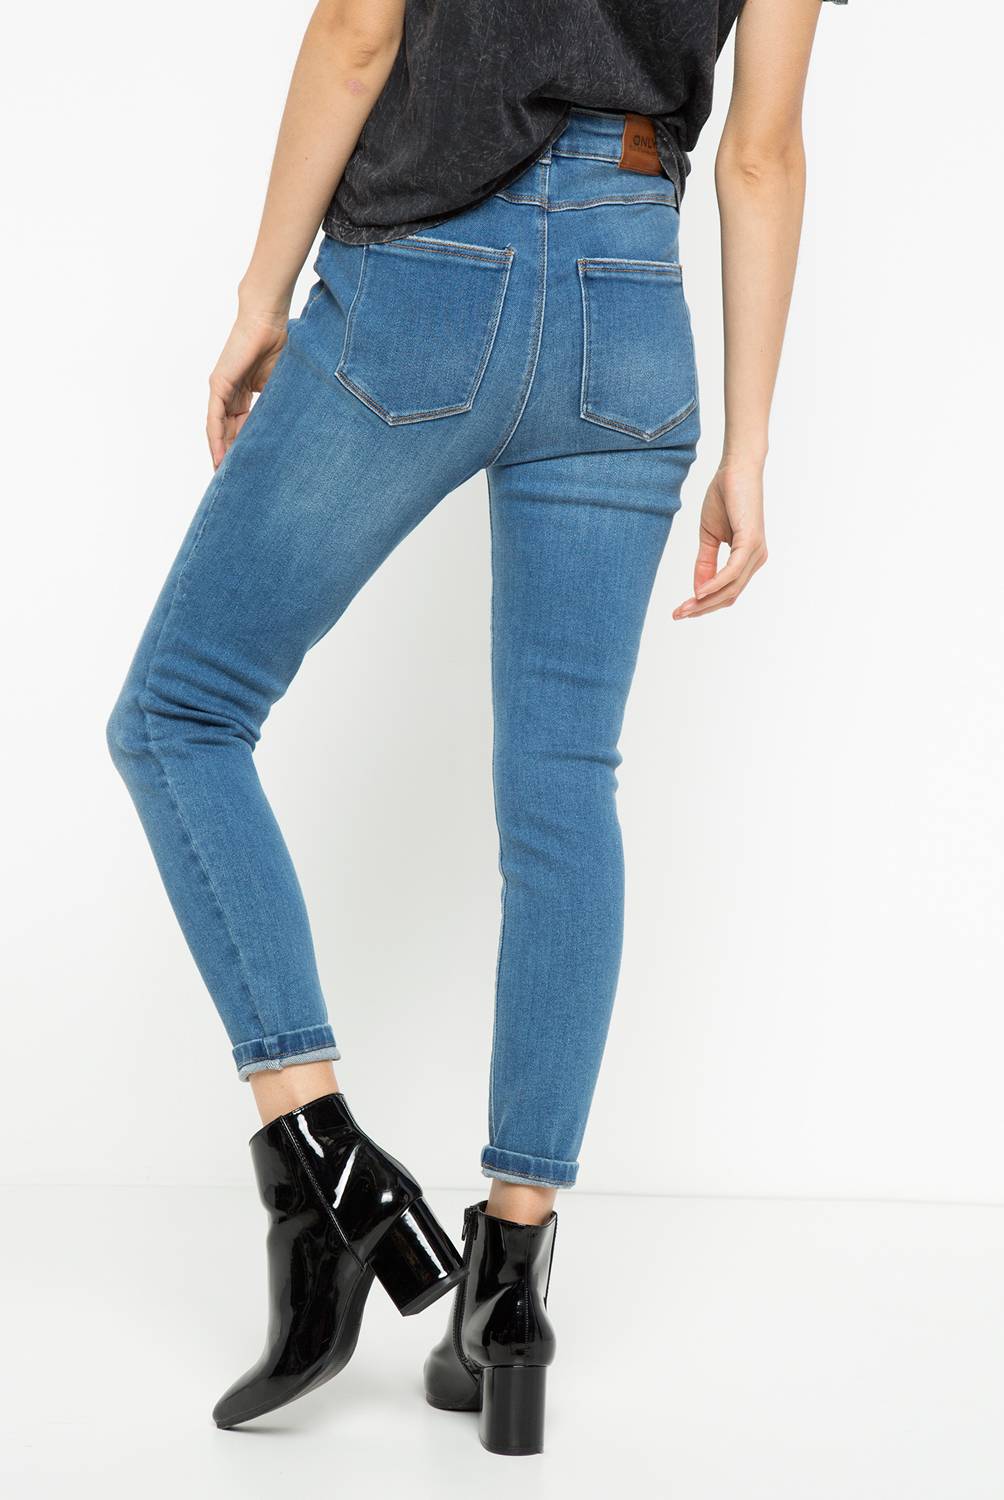 ONLY - Only Jeans de Algodón Skinny Mujer